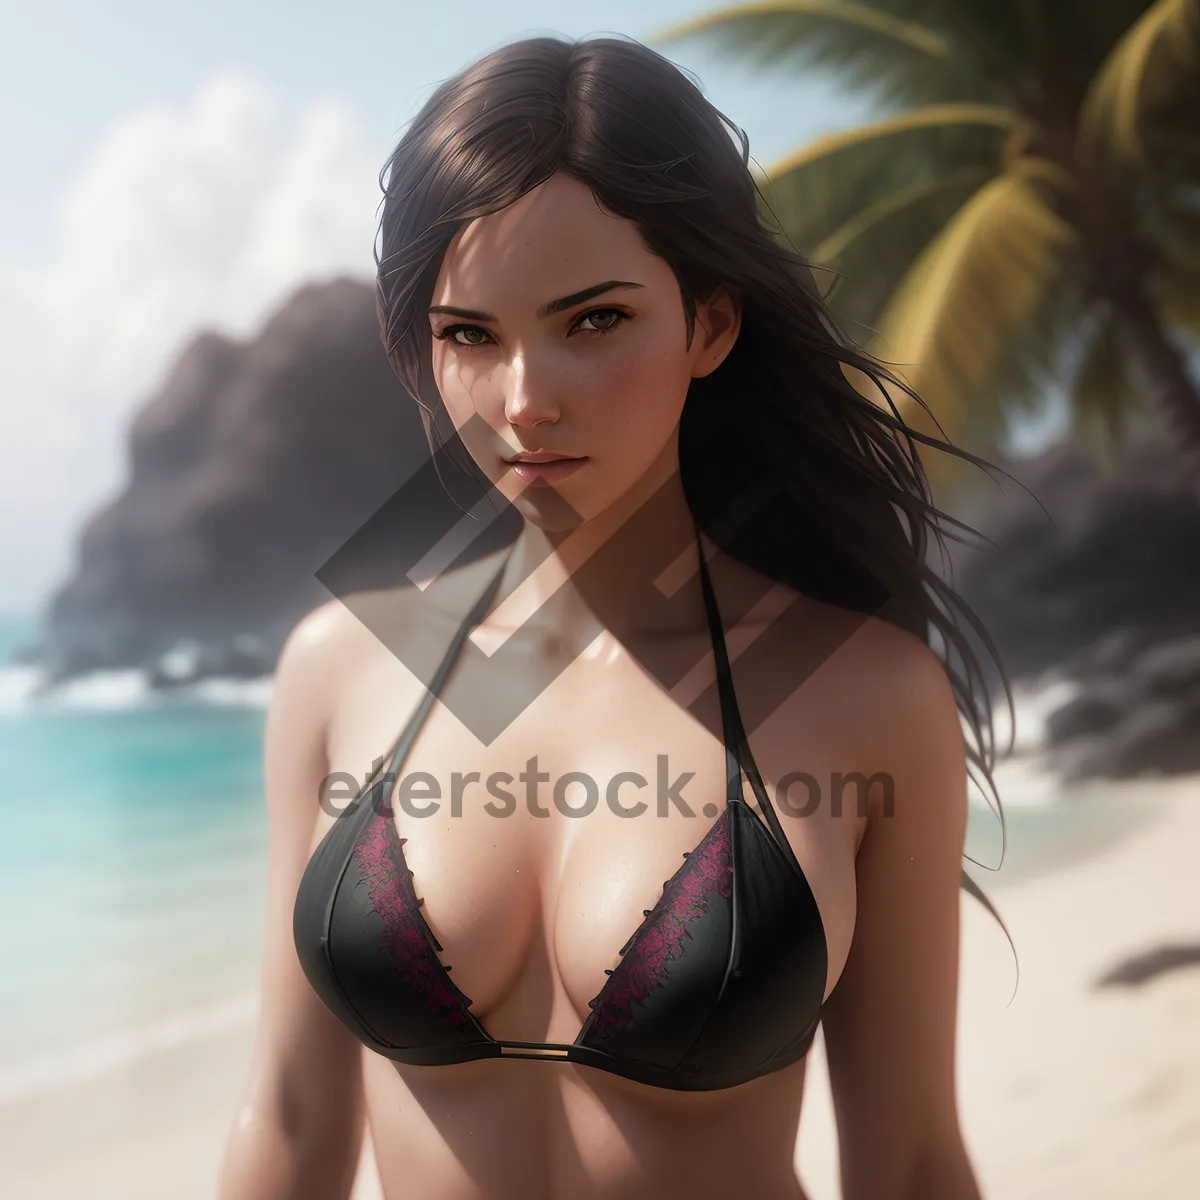 Picture of Beach Babe Bikini Sensation: Stunning Model in Swimwear